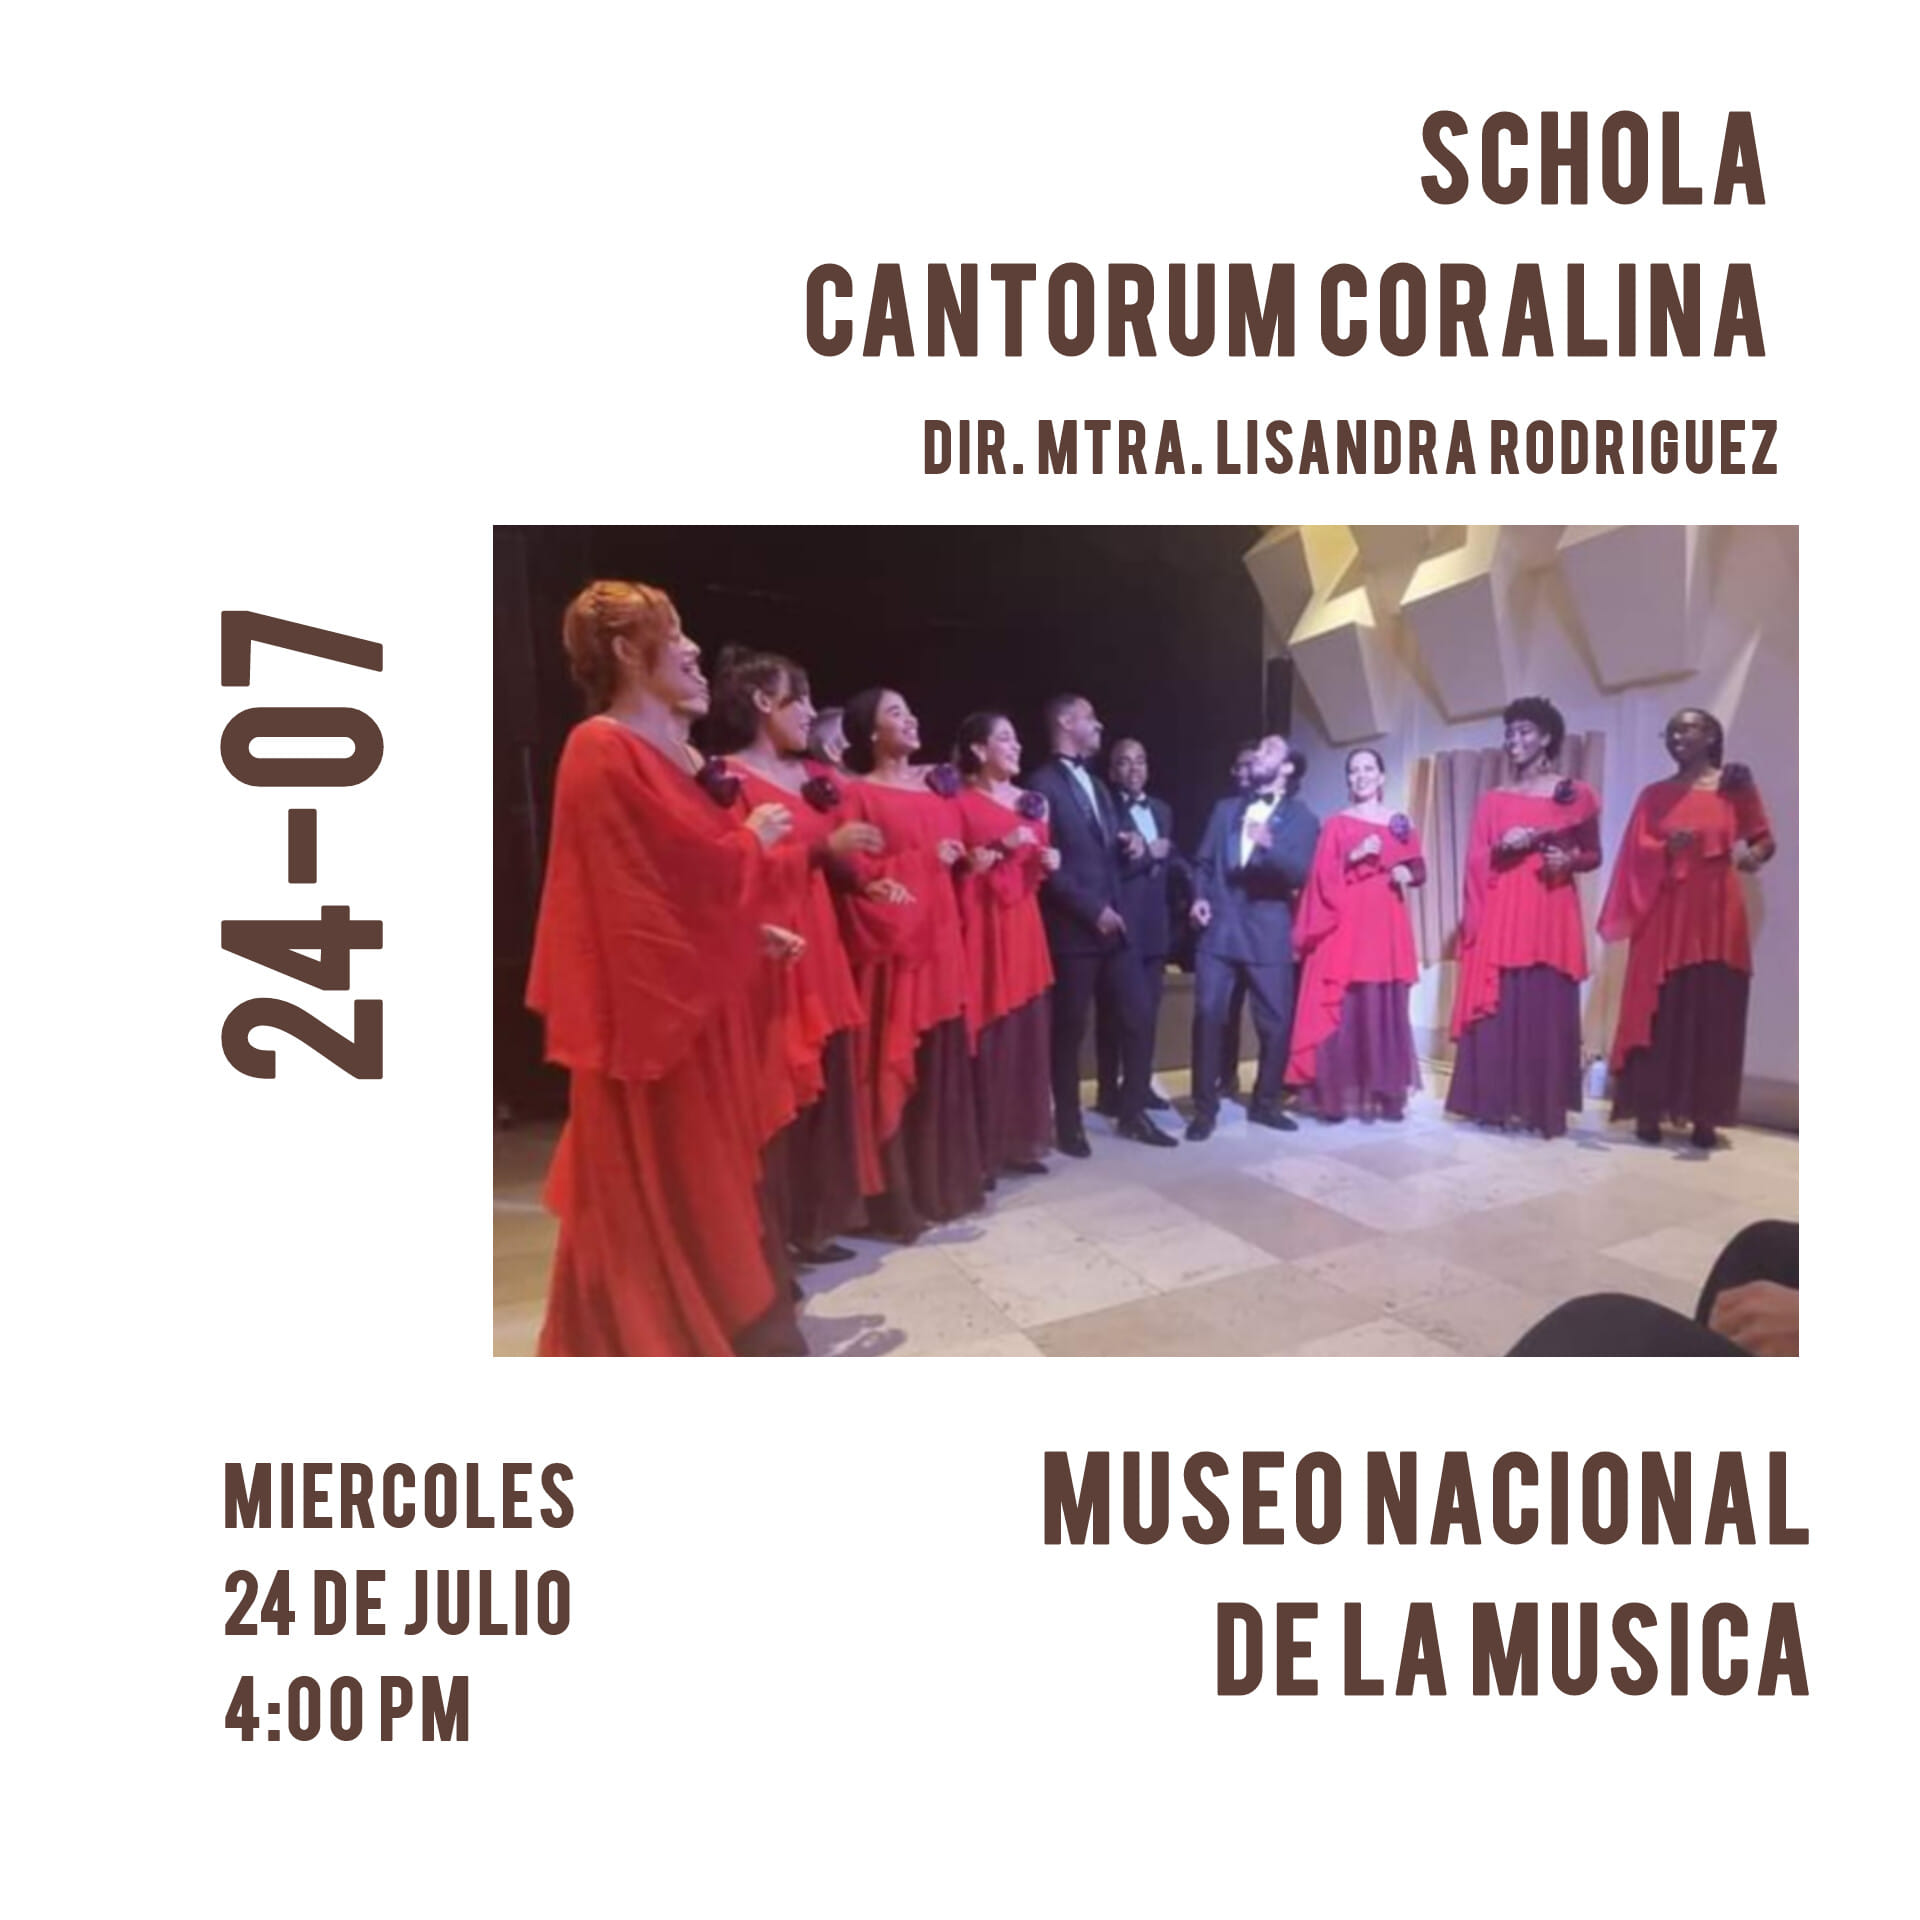 Schola Cantorum Coralina julio